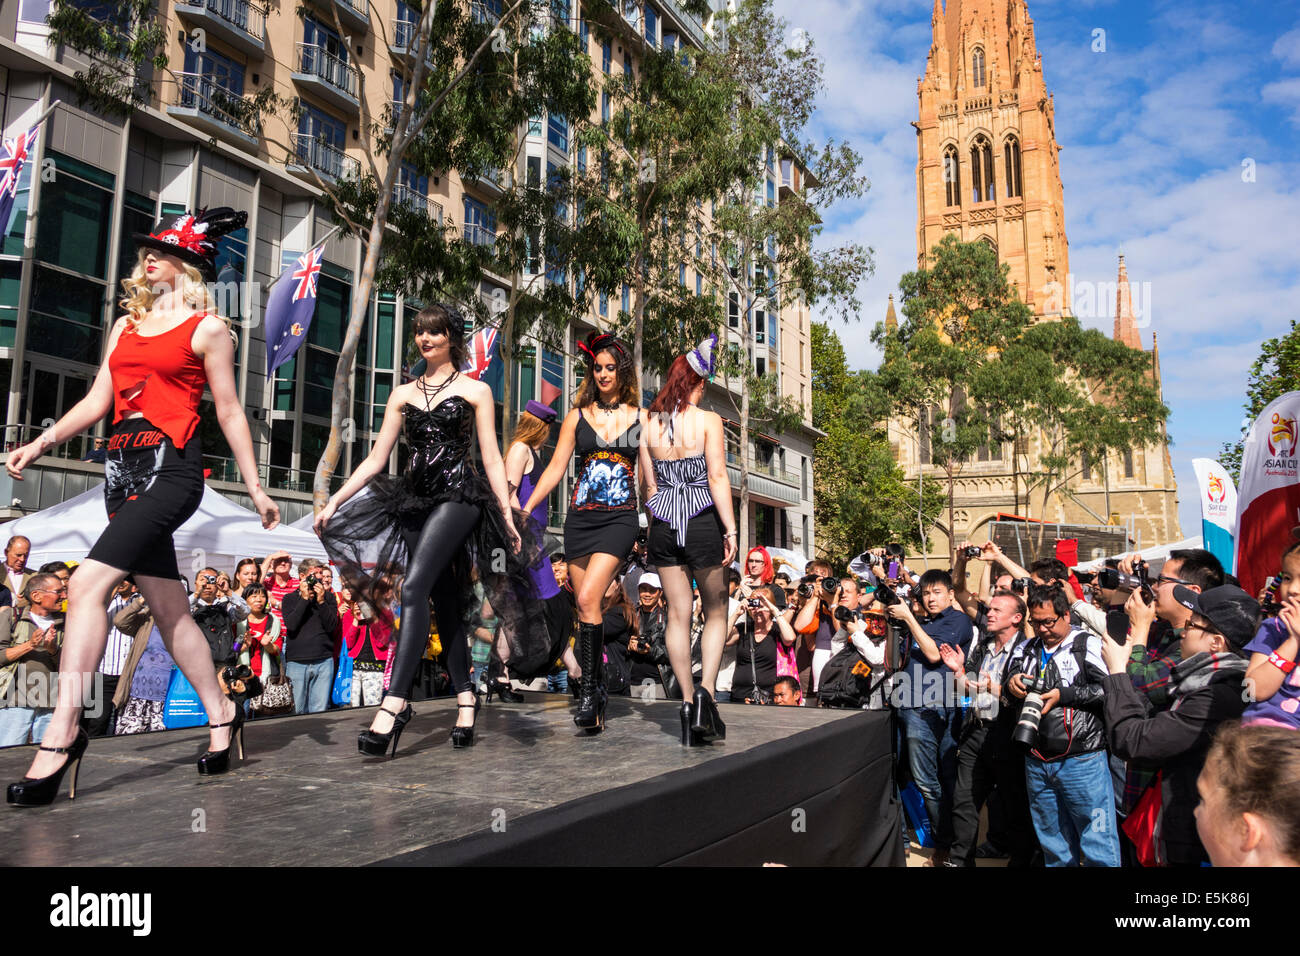 Melbourne Australie,Swanston Street,City Square,festival,Lord Mayor's Student Welcome,défilé de mode,piste,femme femme femme femme,modèle,pose,position frappante Banque D'Images